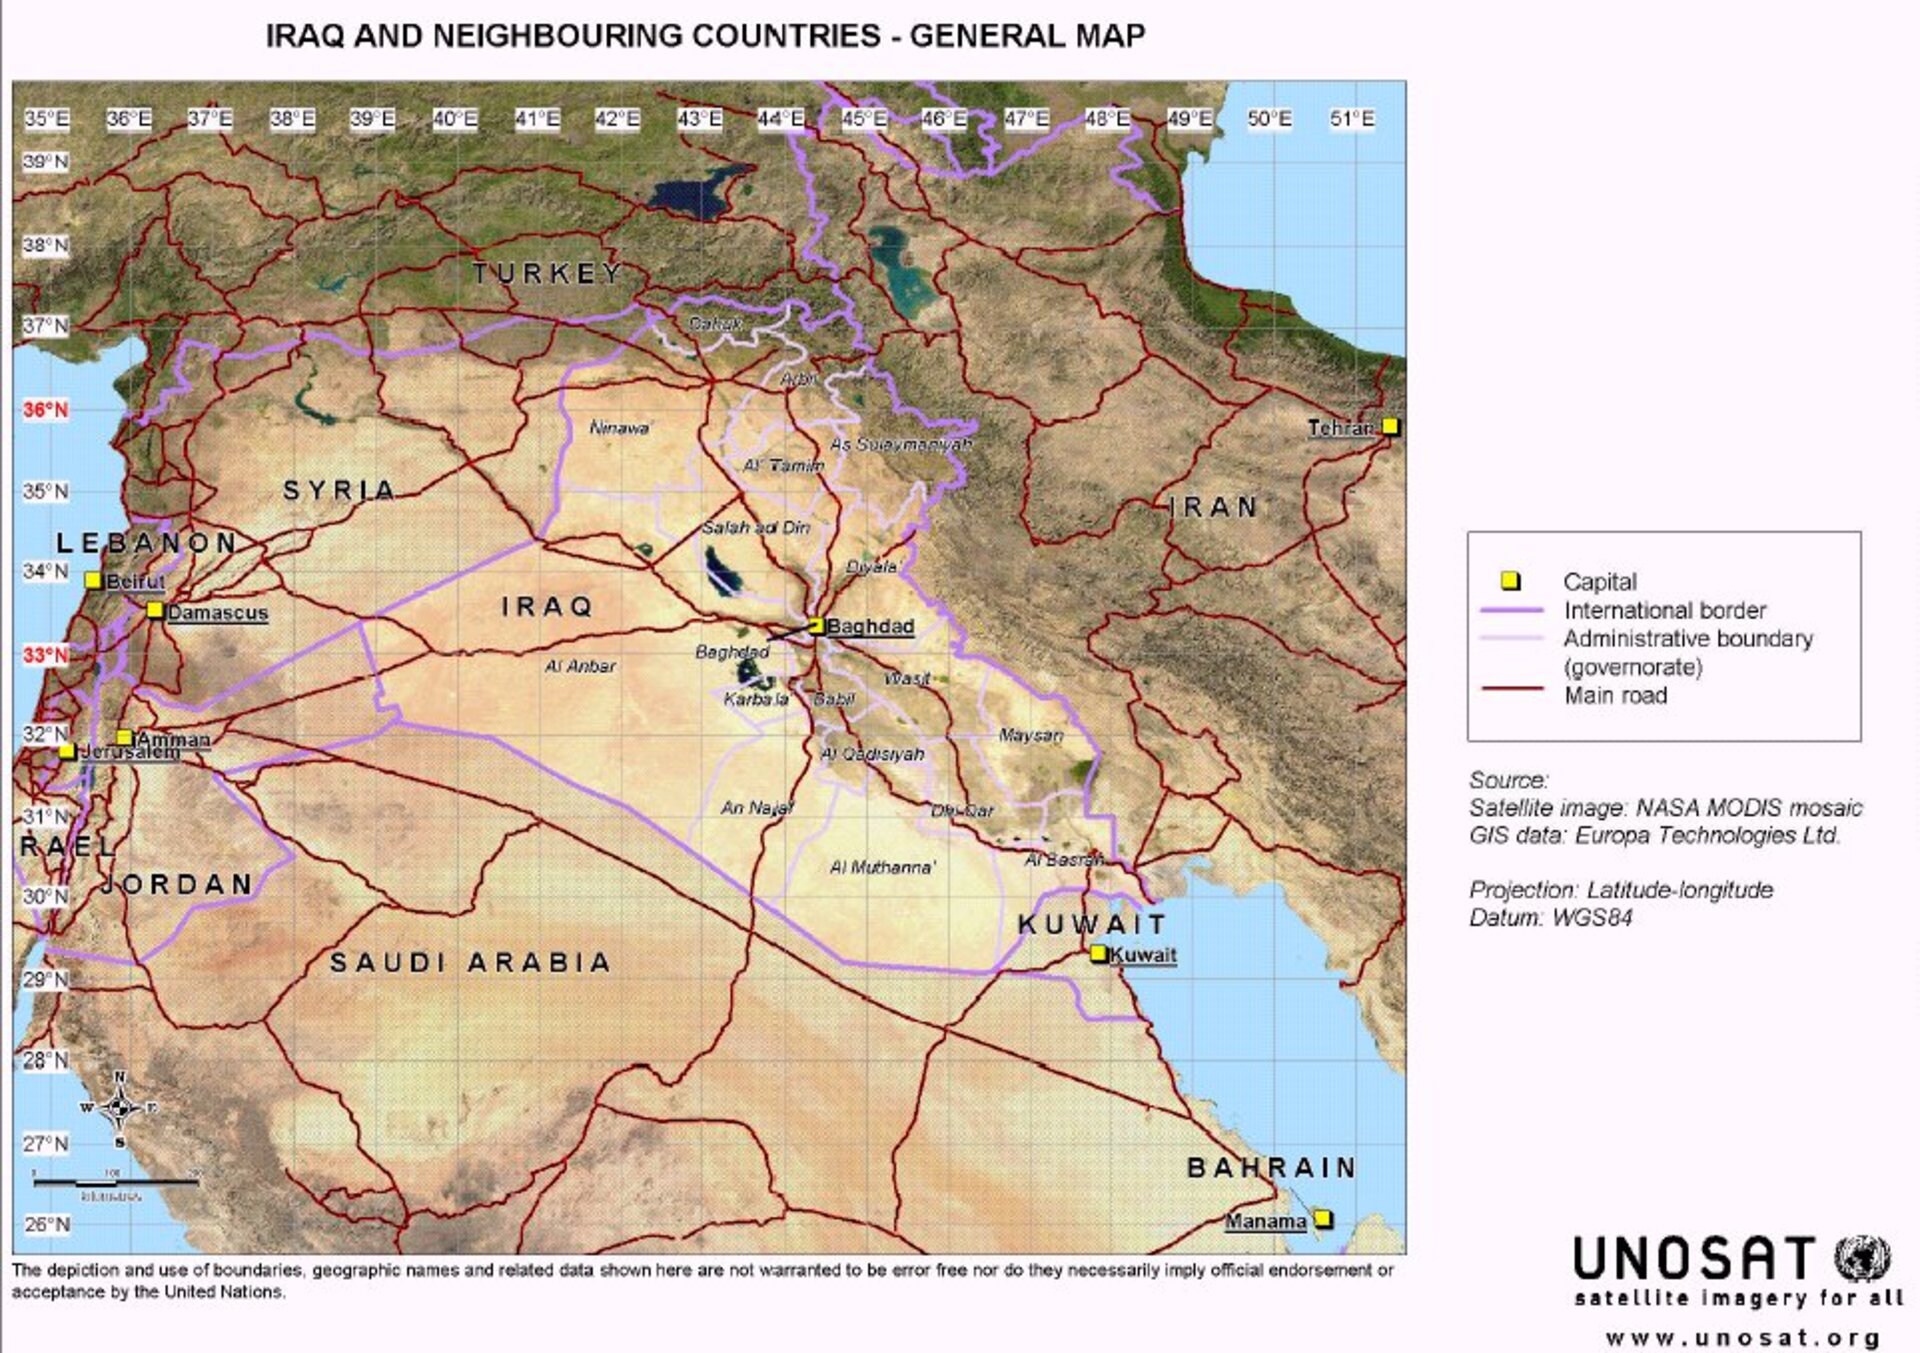 A UNOSAT map of Iraq